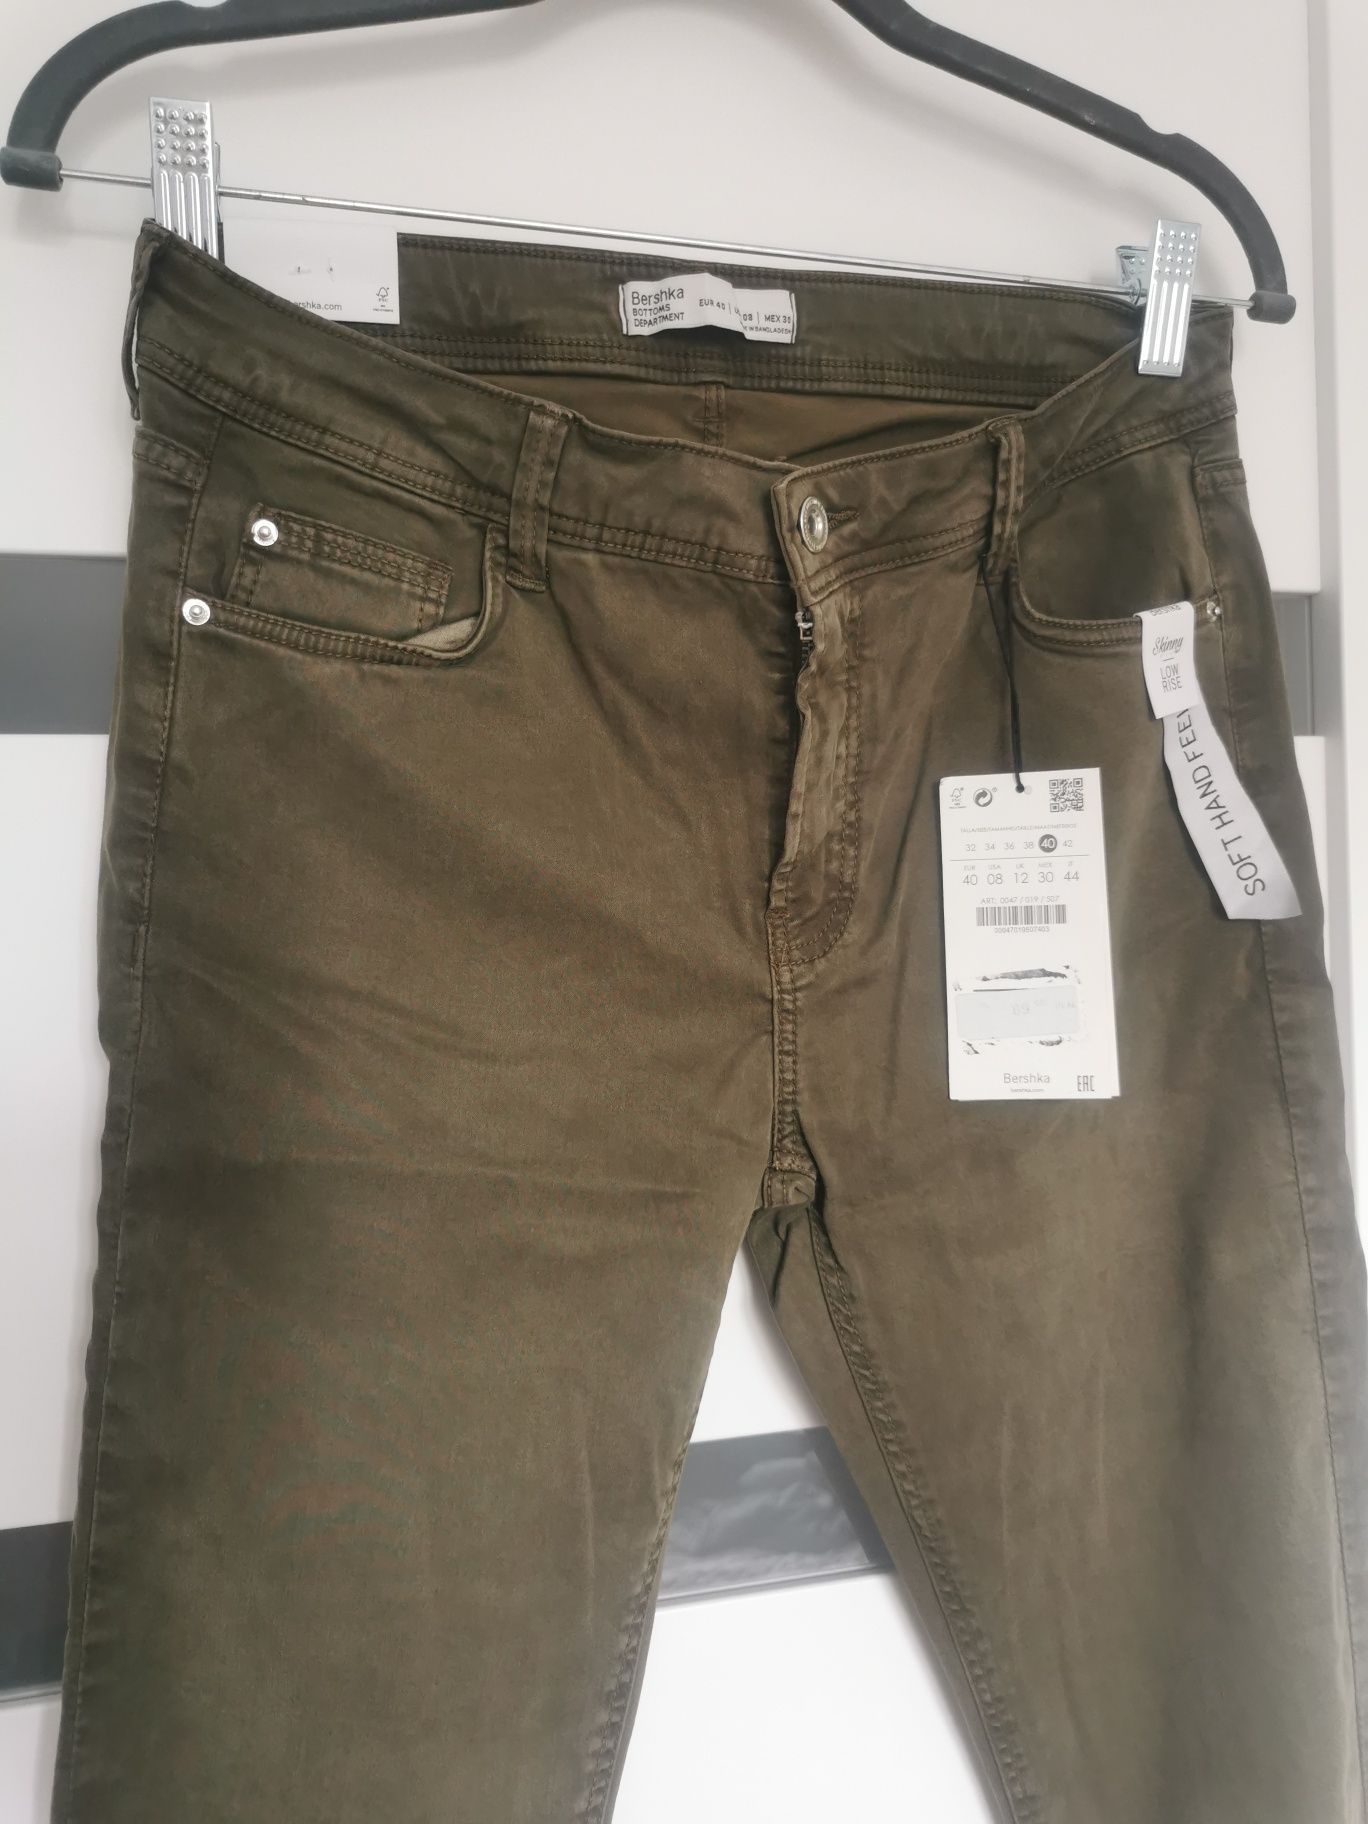 Spodnie zielone khaki NOWE bershka 40 38